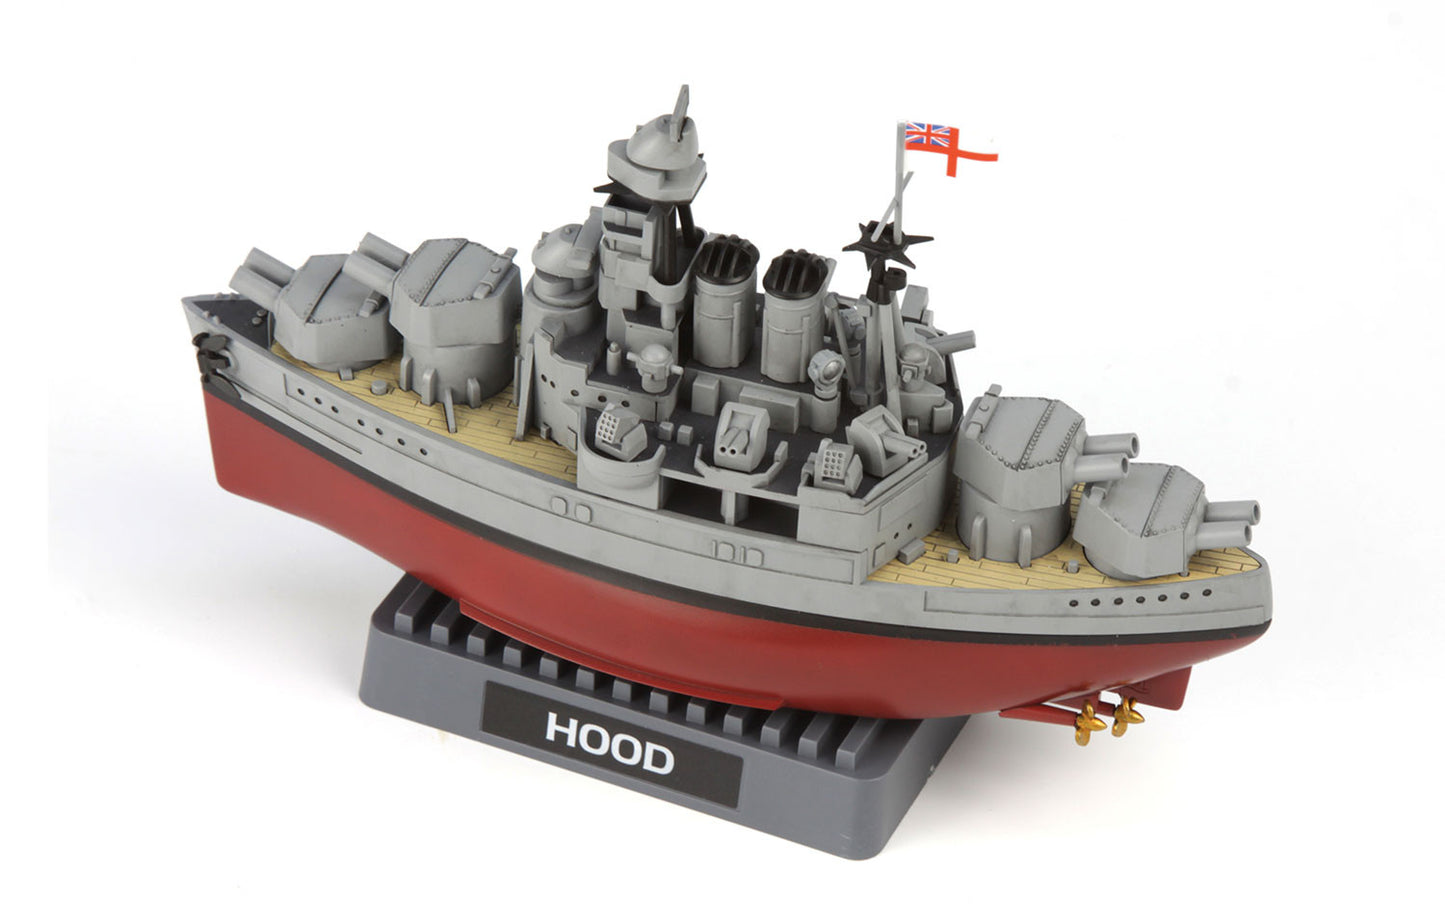 MENG WB-005 Warship builder HOOD